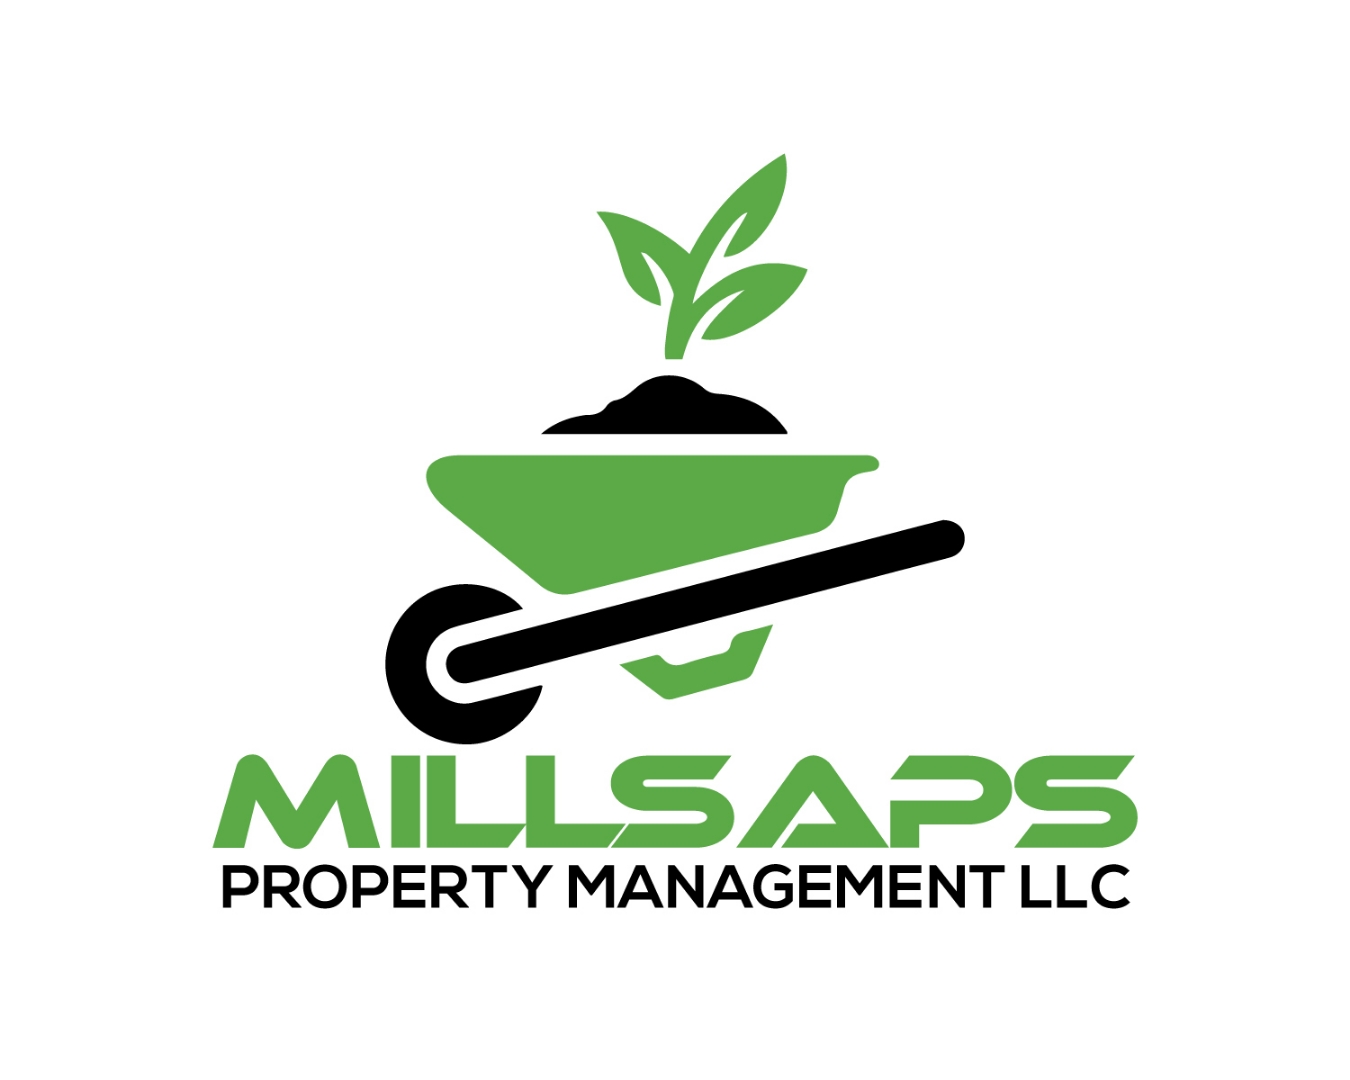 Millsaps Property Management LLC Logo